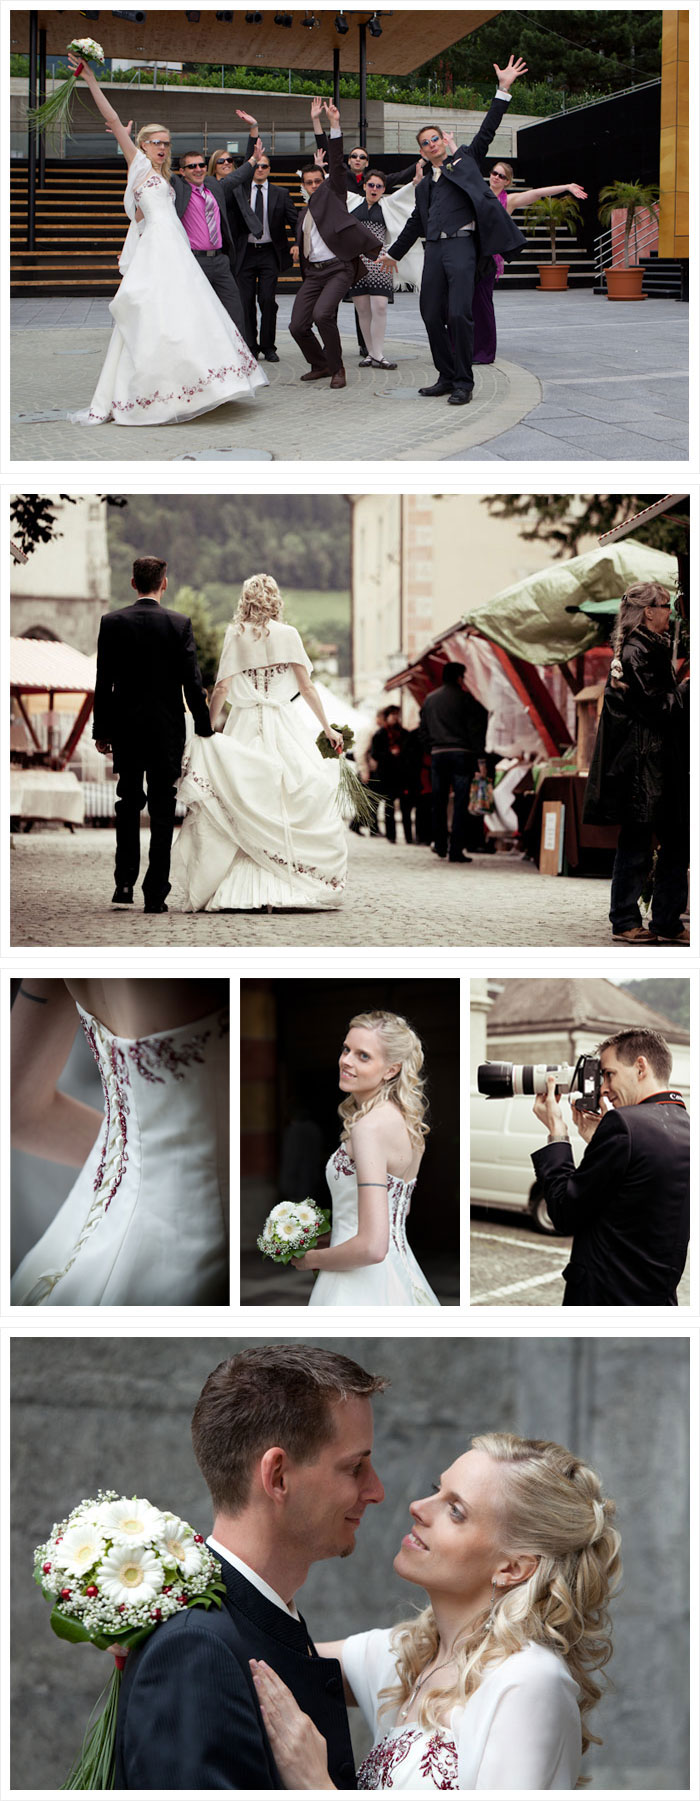 Our very own wedding - Nina & Phil - Blog of Nina Hintringer Photography - Wedding Photography, Wedding Reportage and Destination Weddings